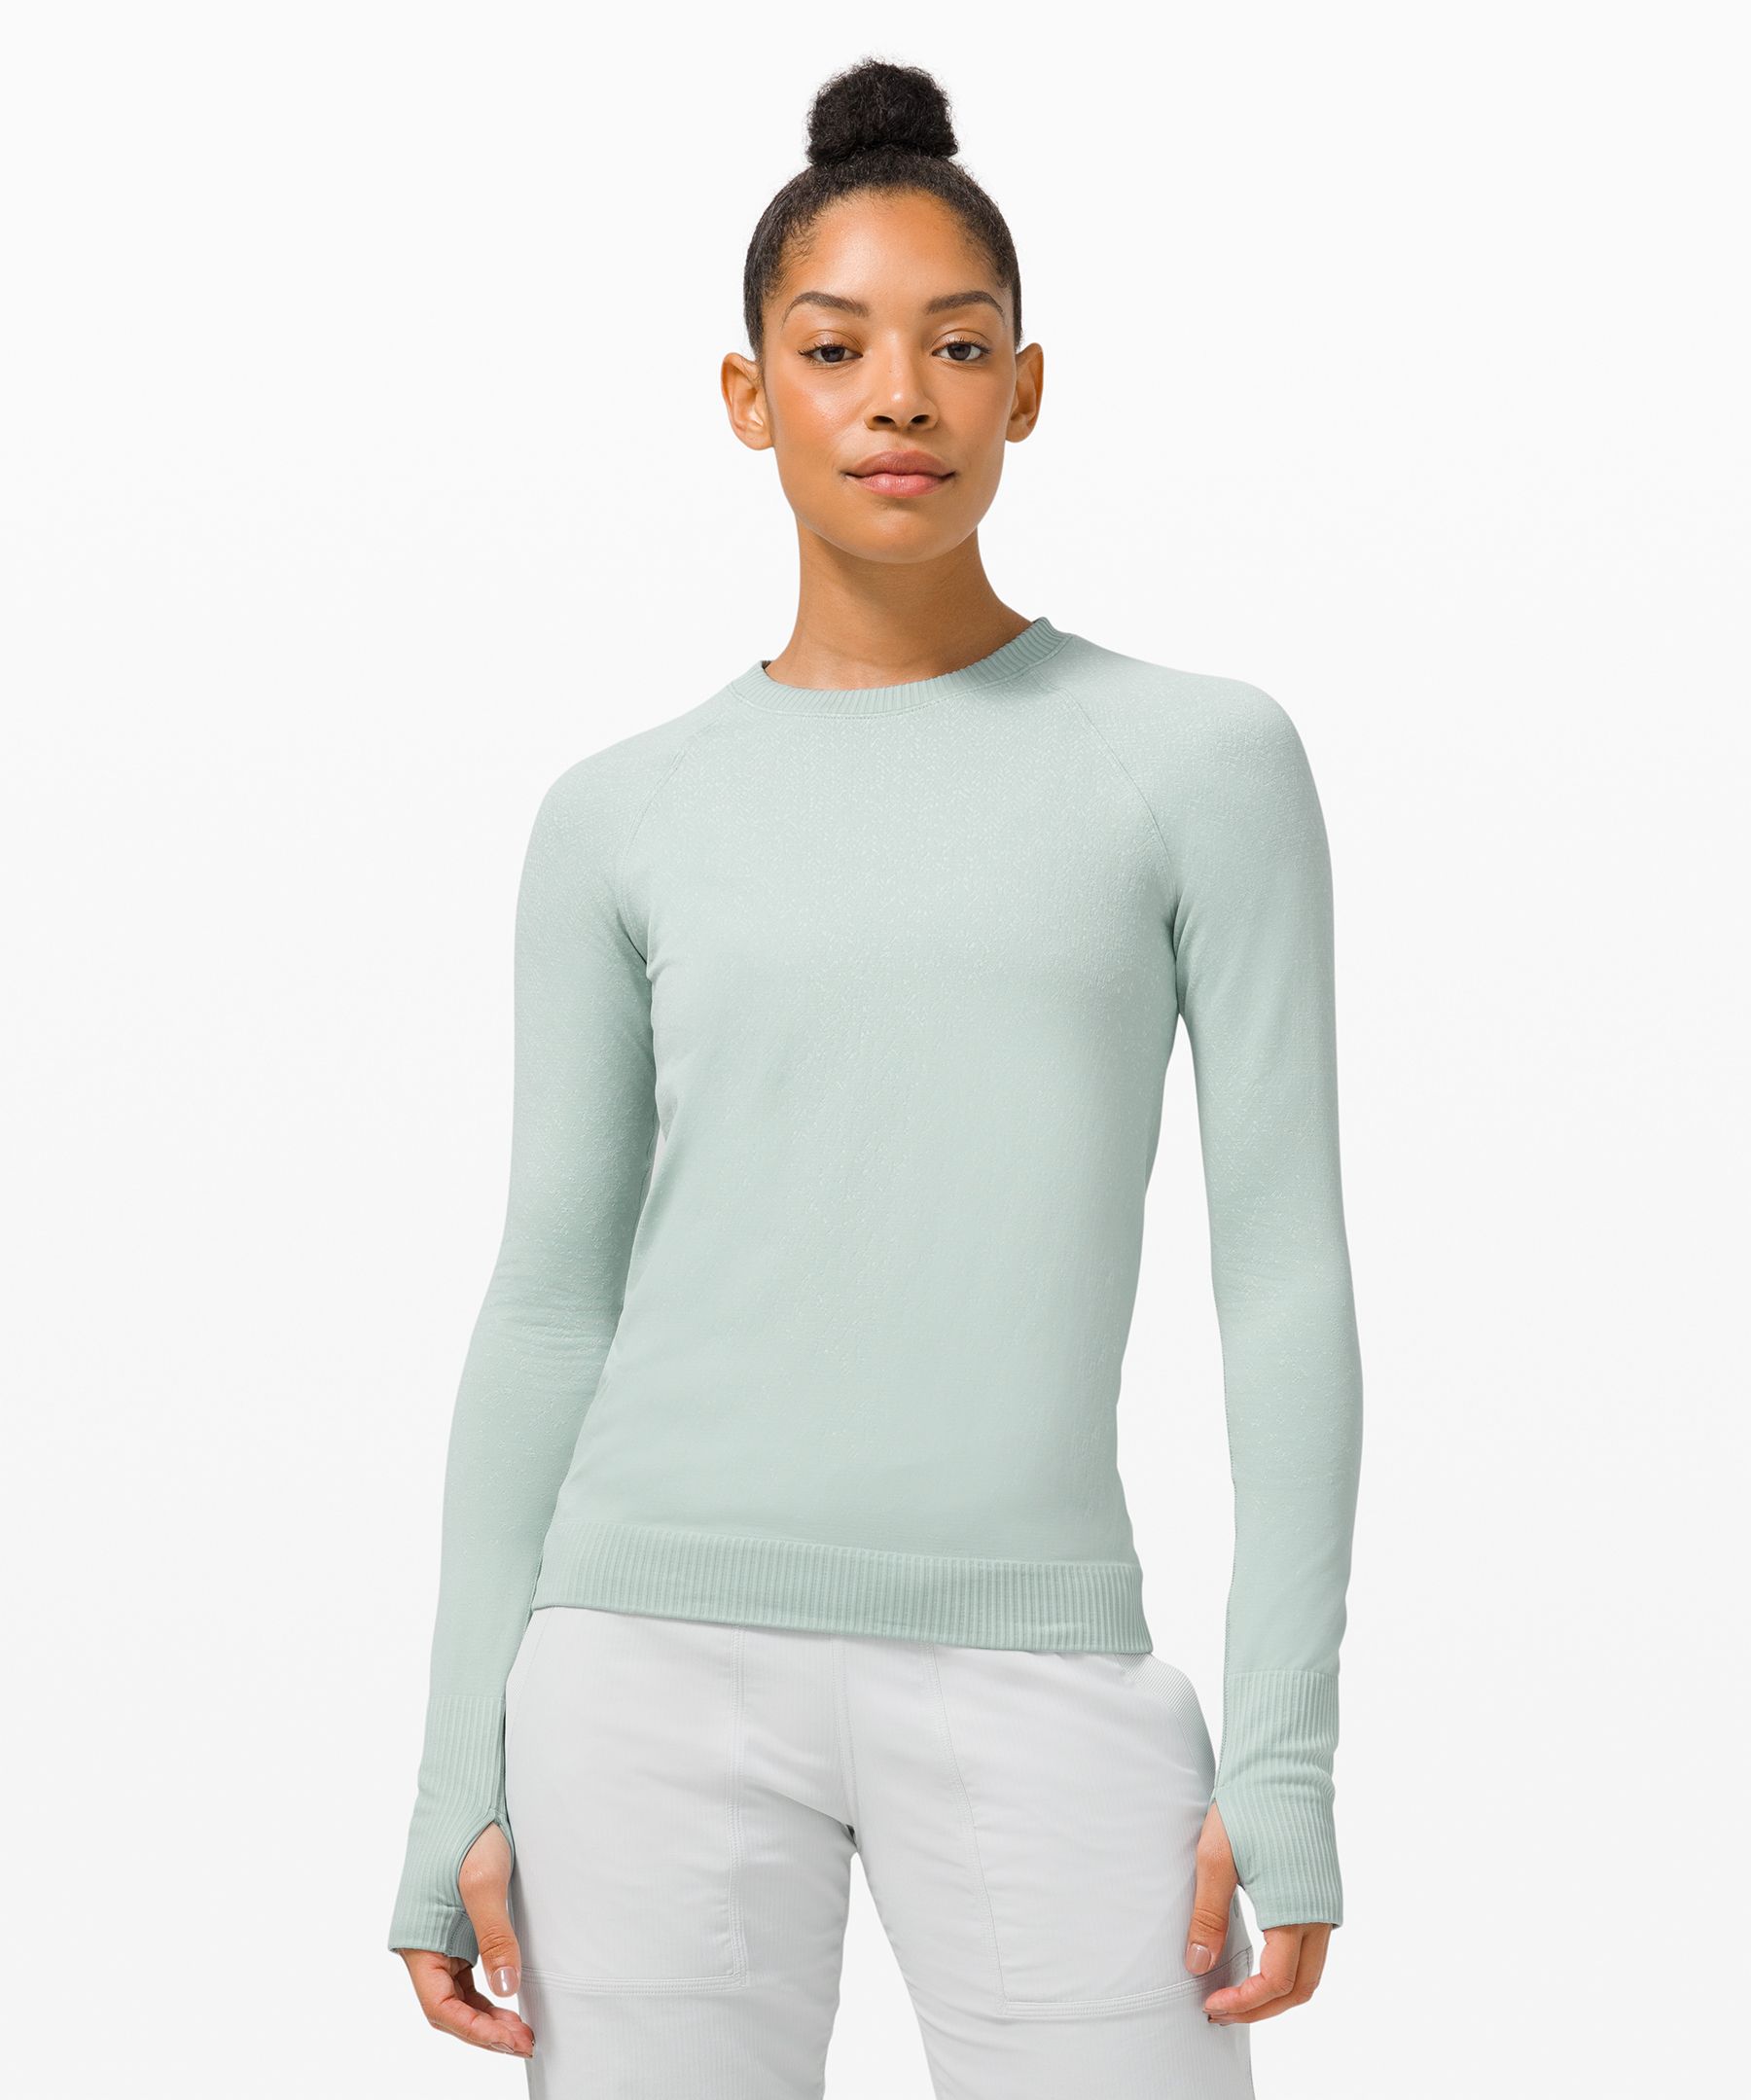 Lululemon athletica Rest Less Pullover, Women's Long Sleeve Shirts